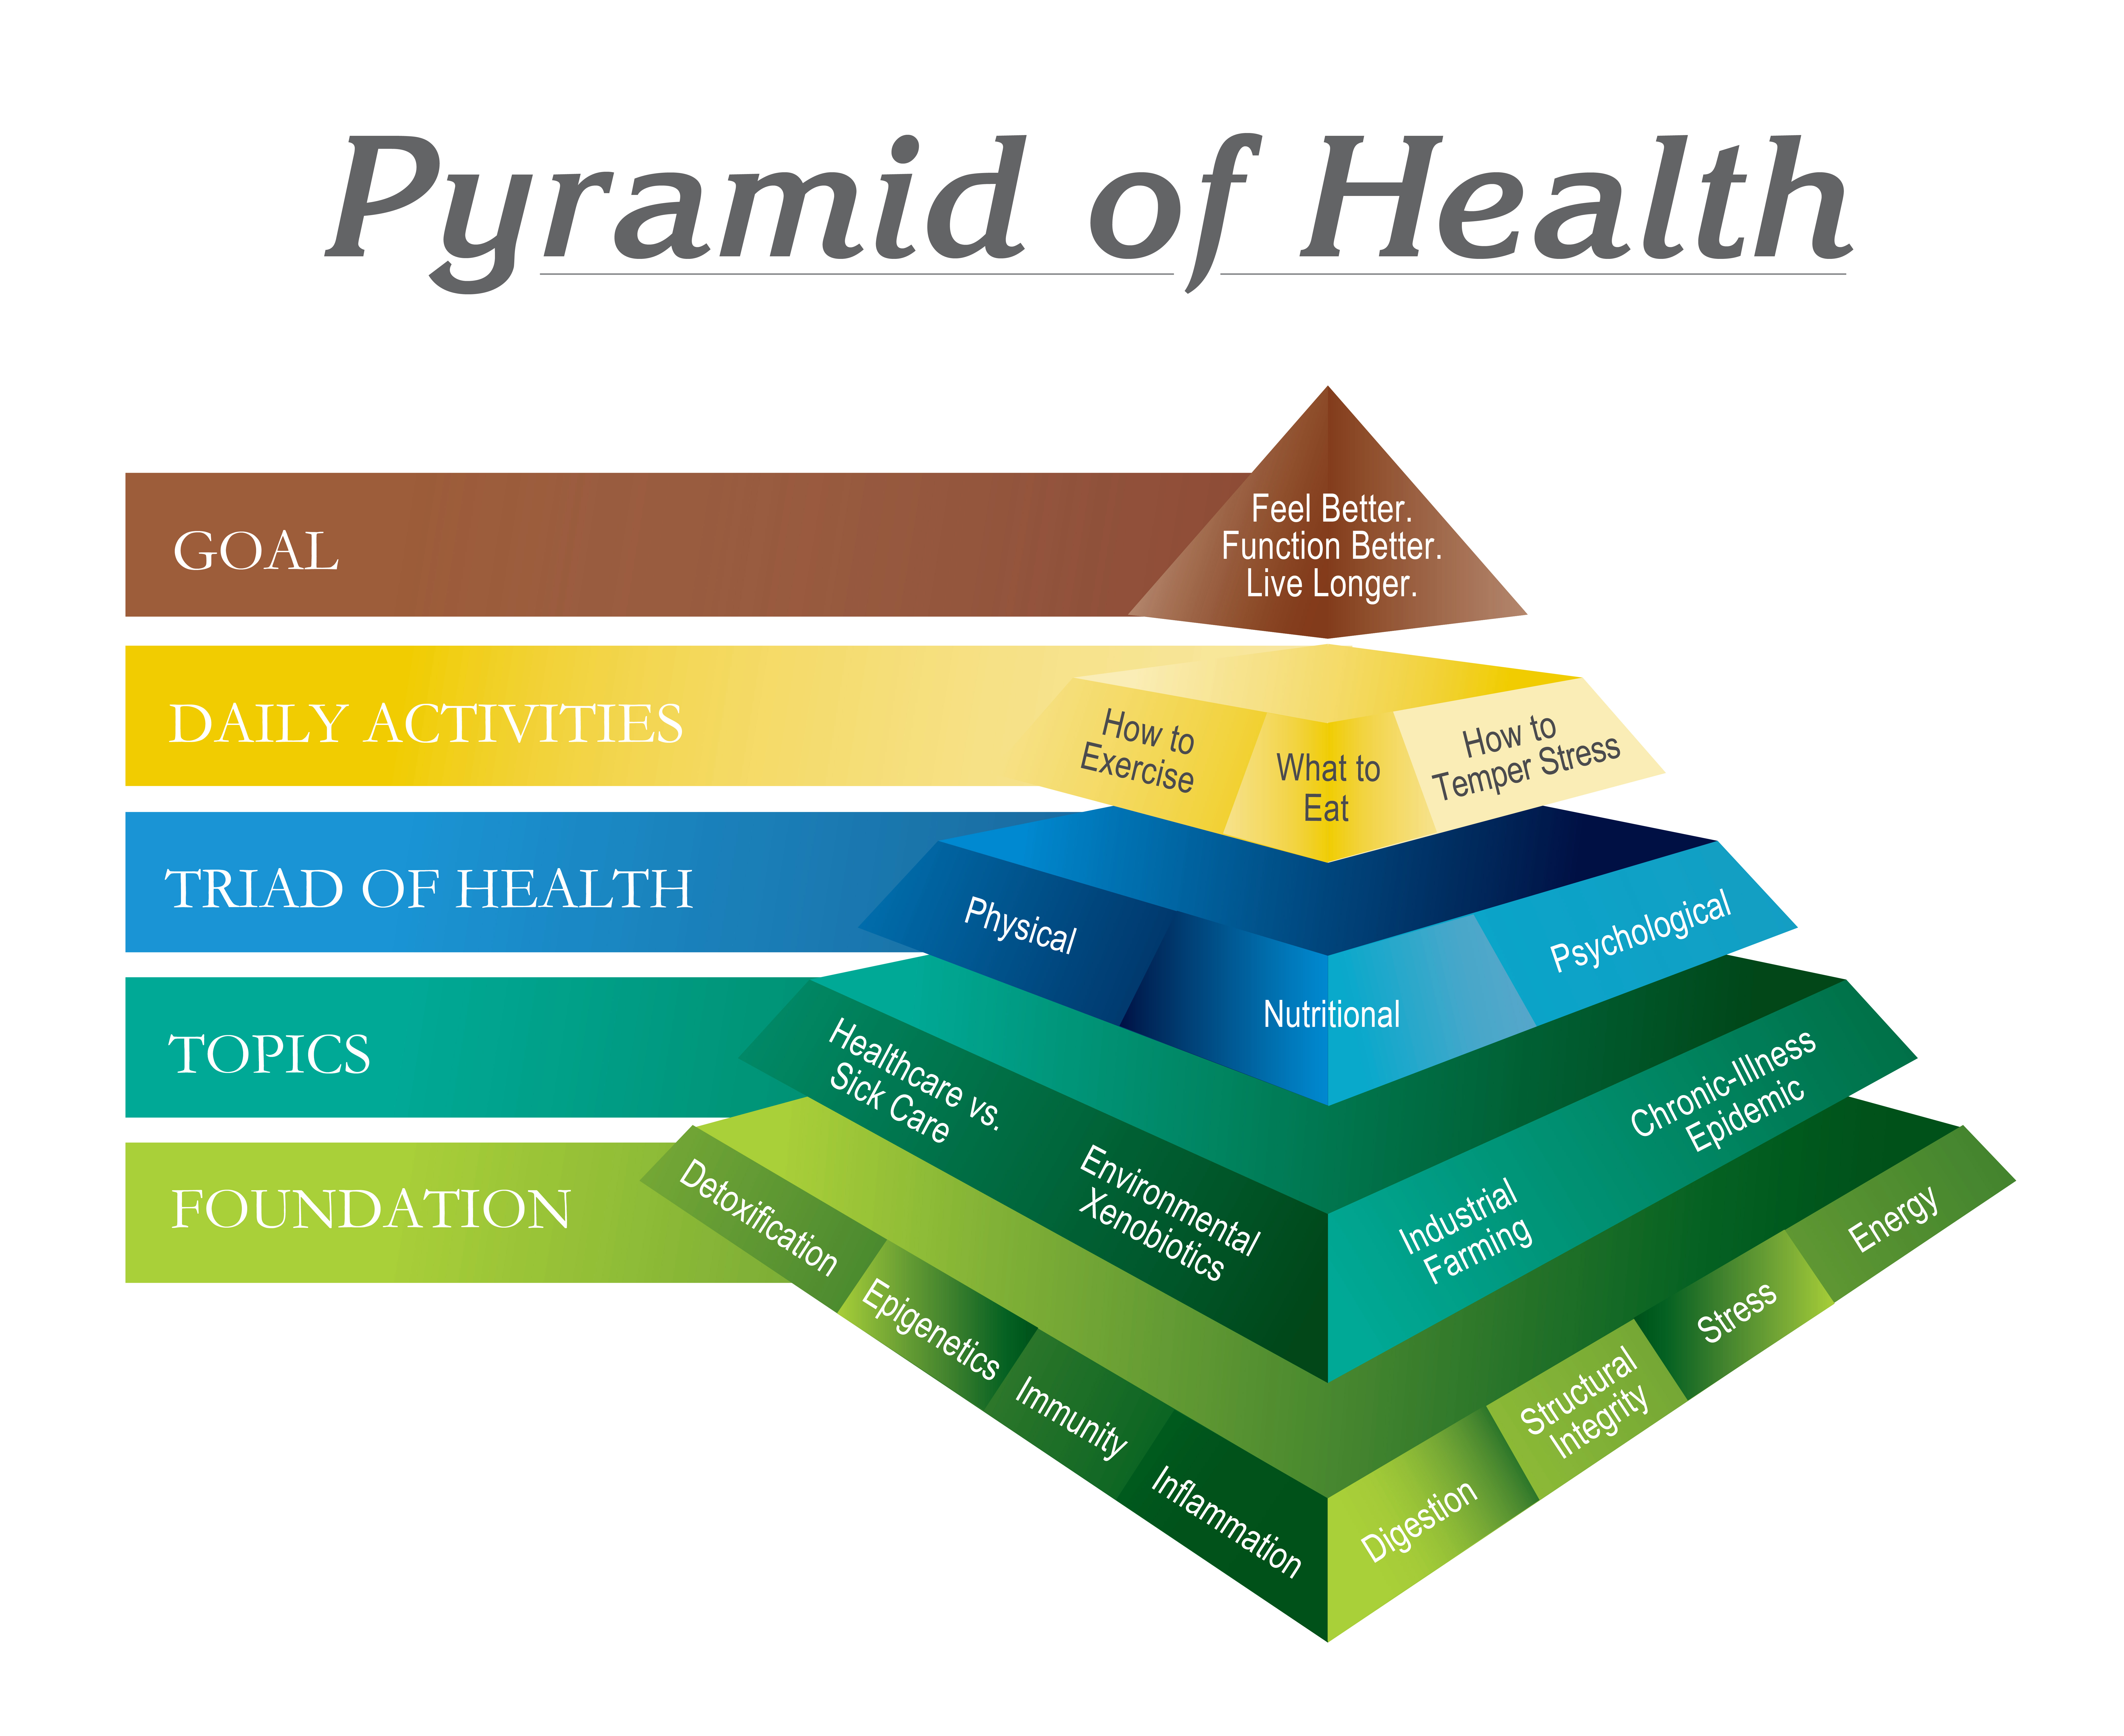 Pyramid of Health